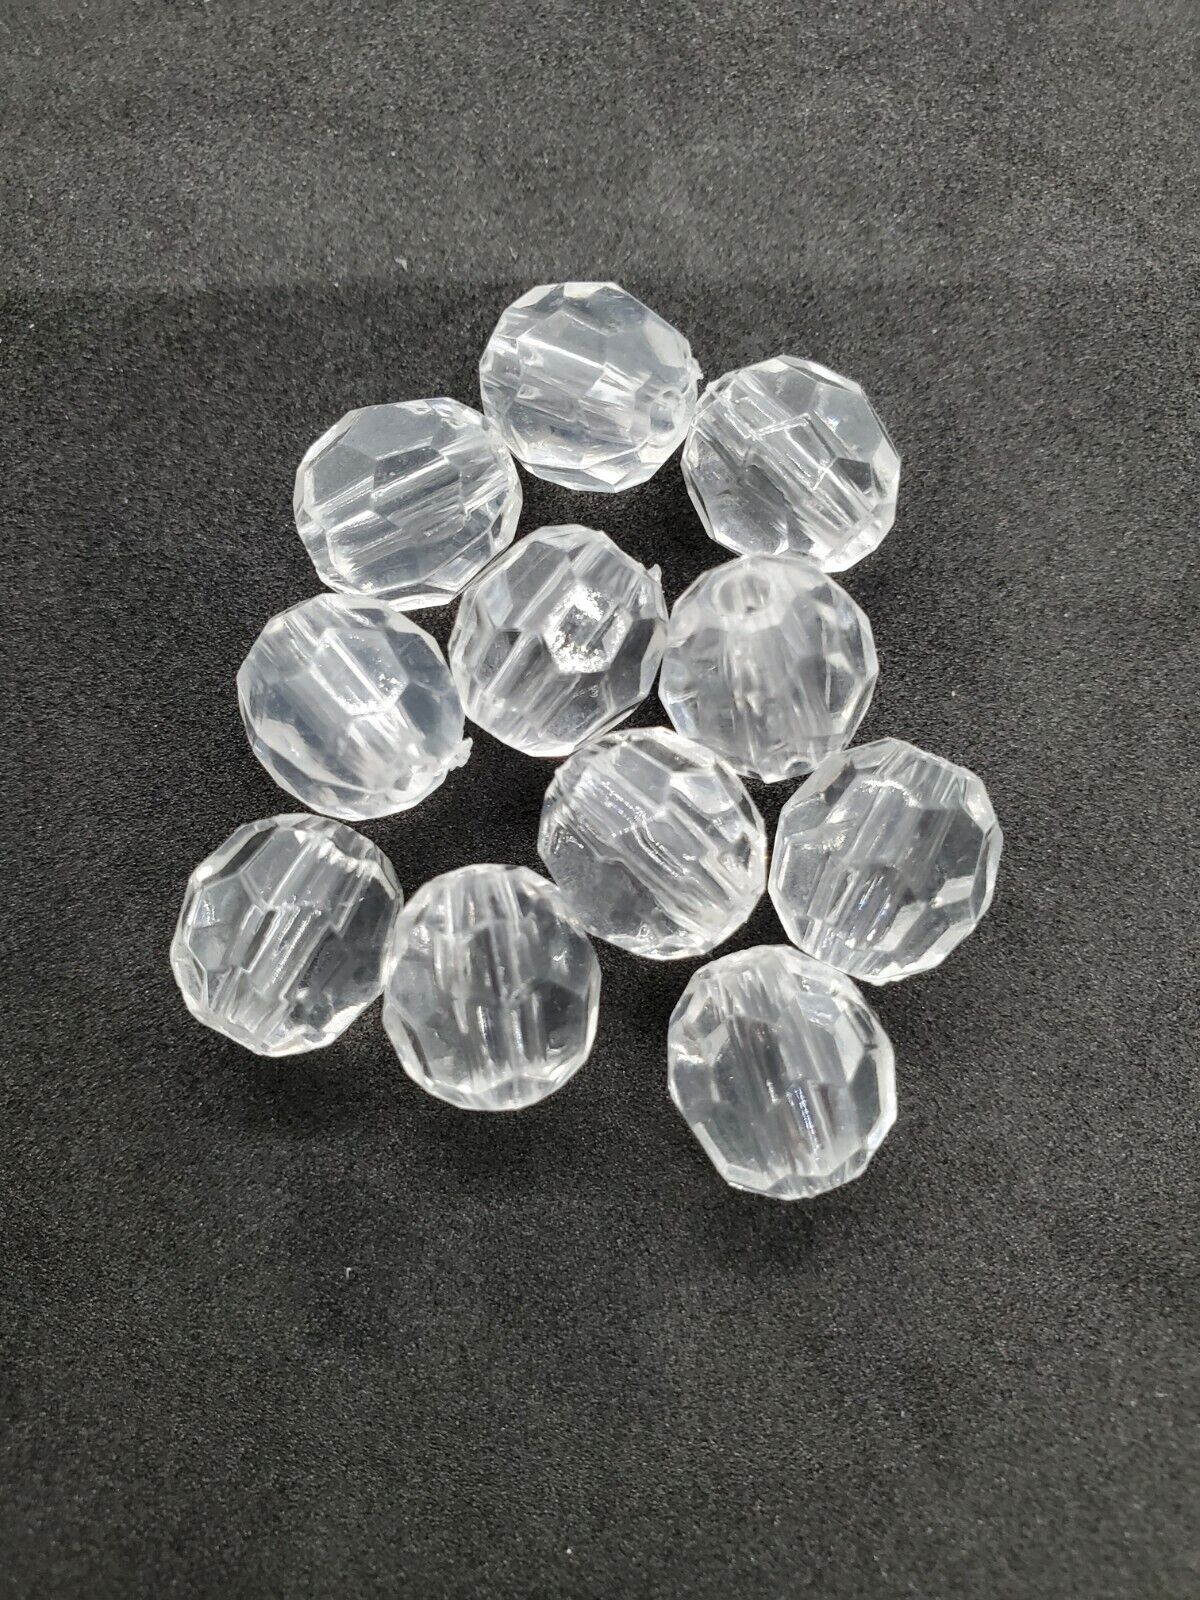 Diamond Fishing Glow Beads - 100 Pack - Oval